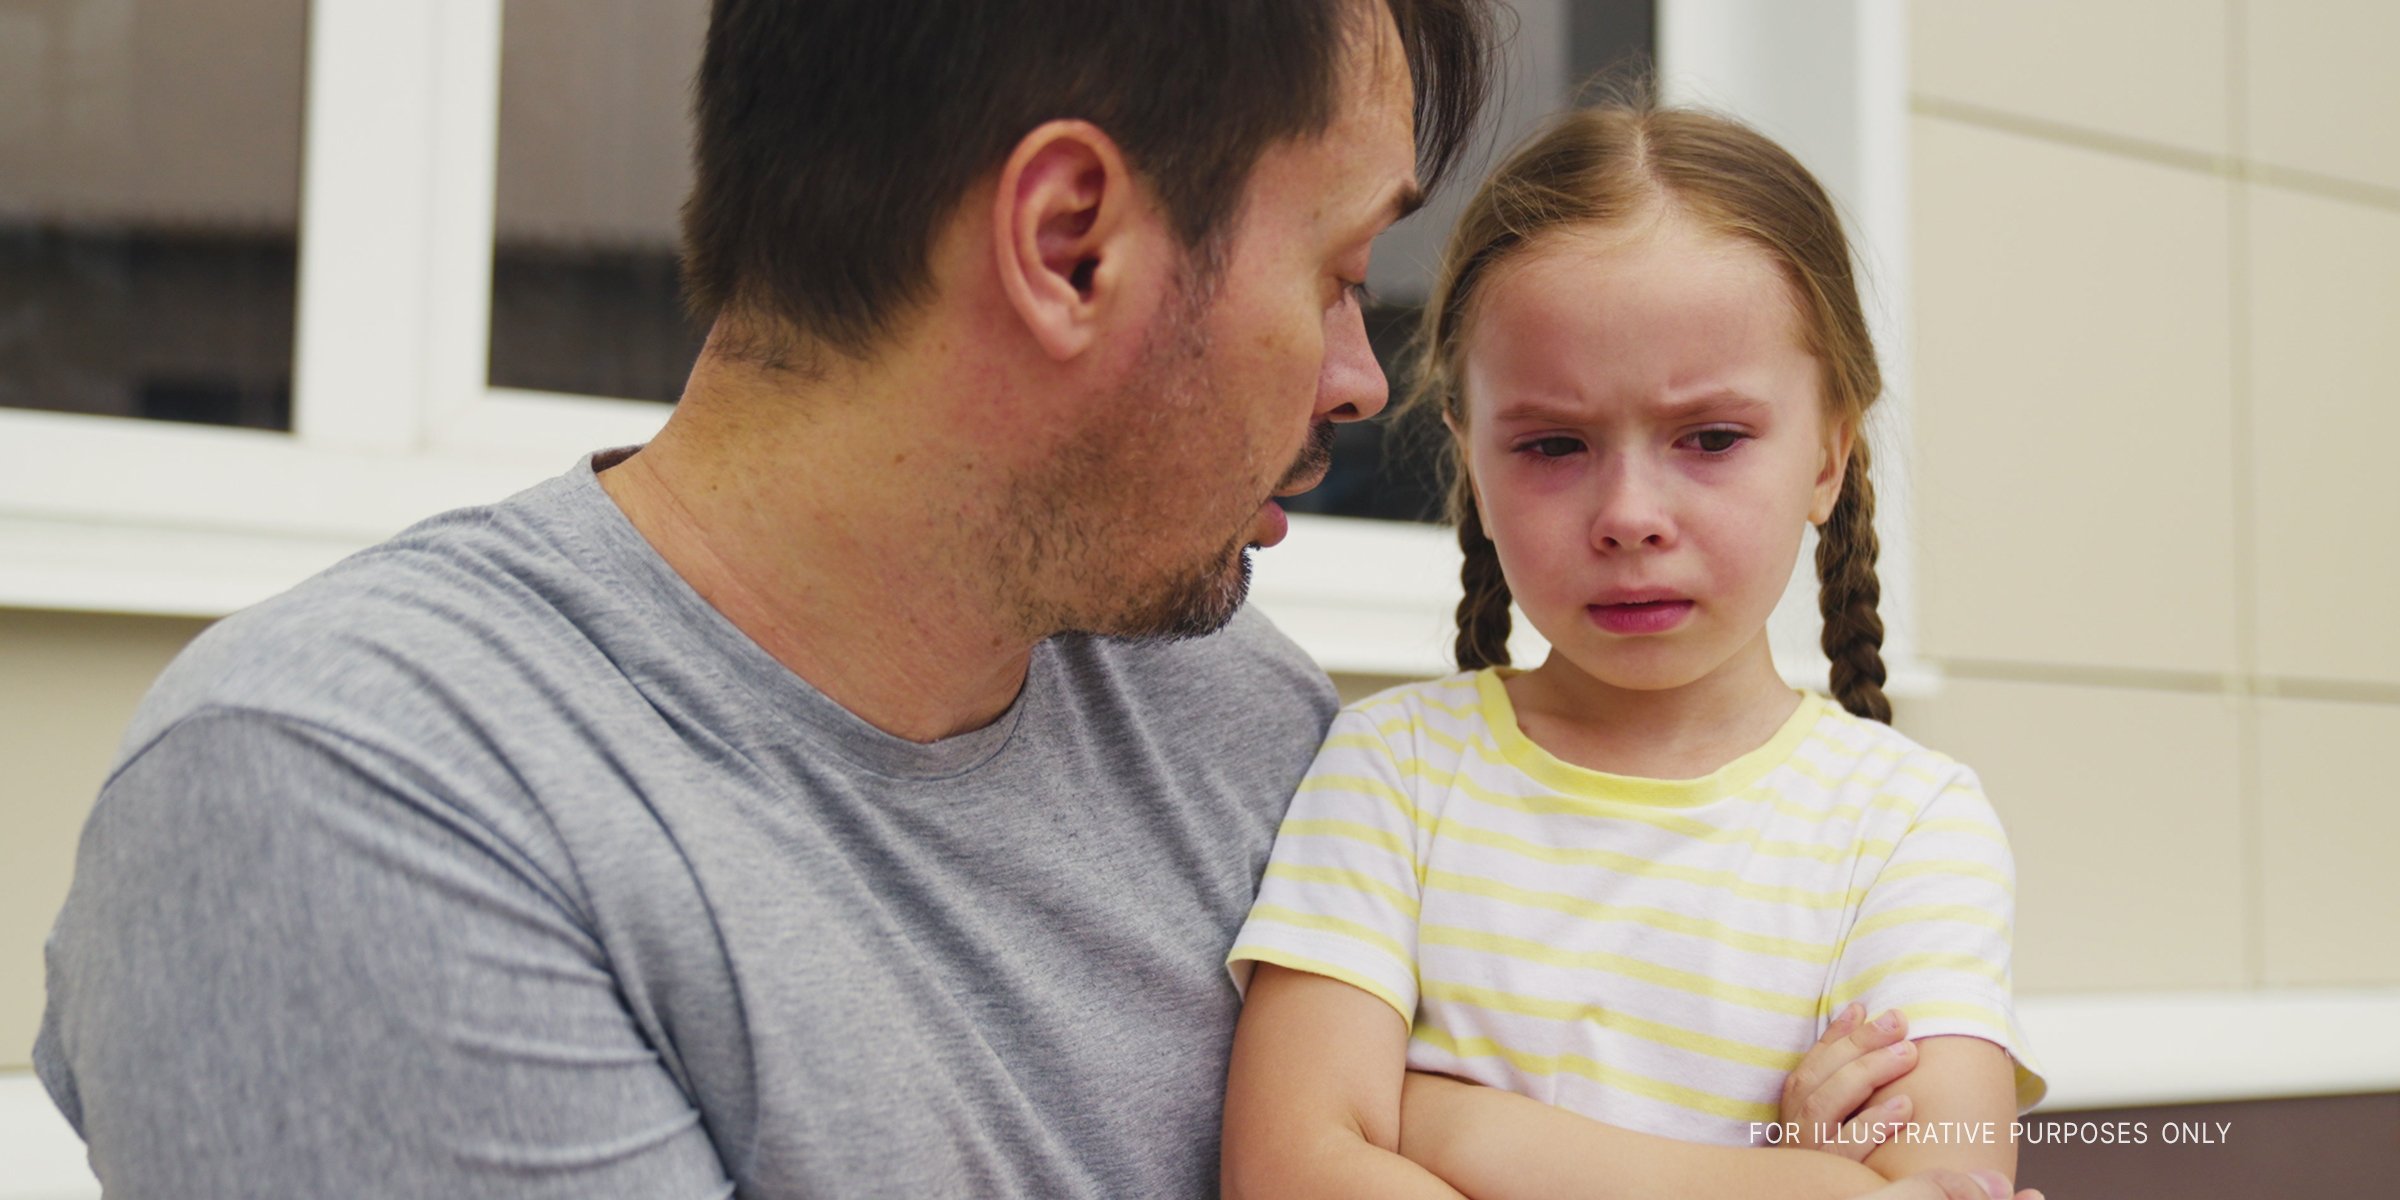 Upset Girl Talking to Her Dad. | Source: Shutterstock